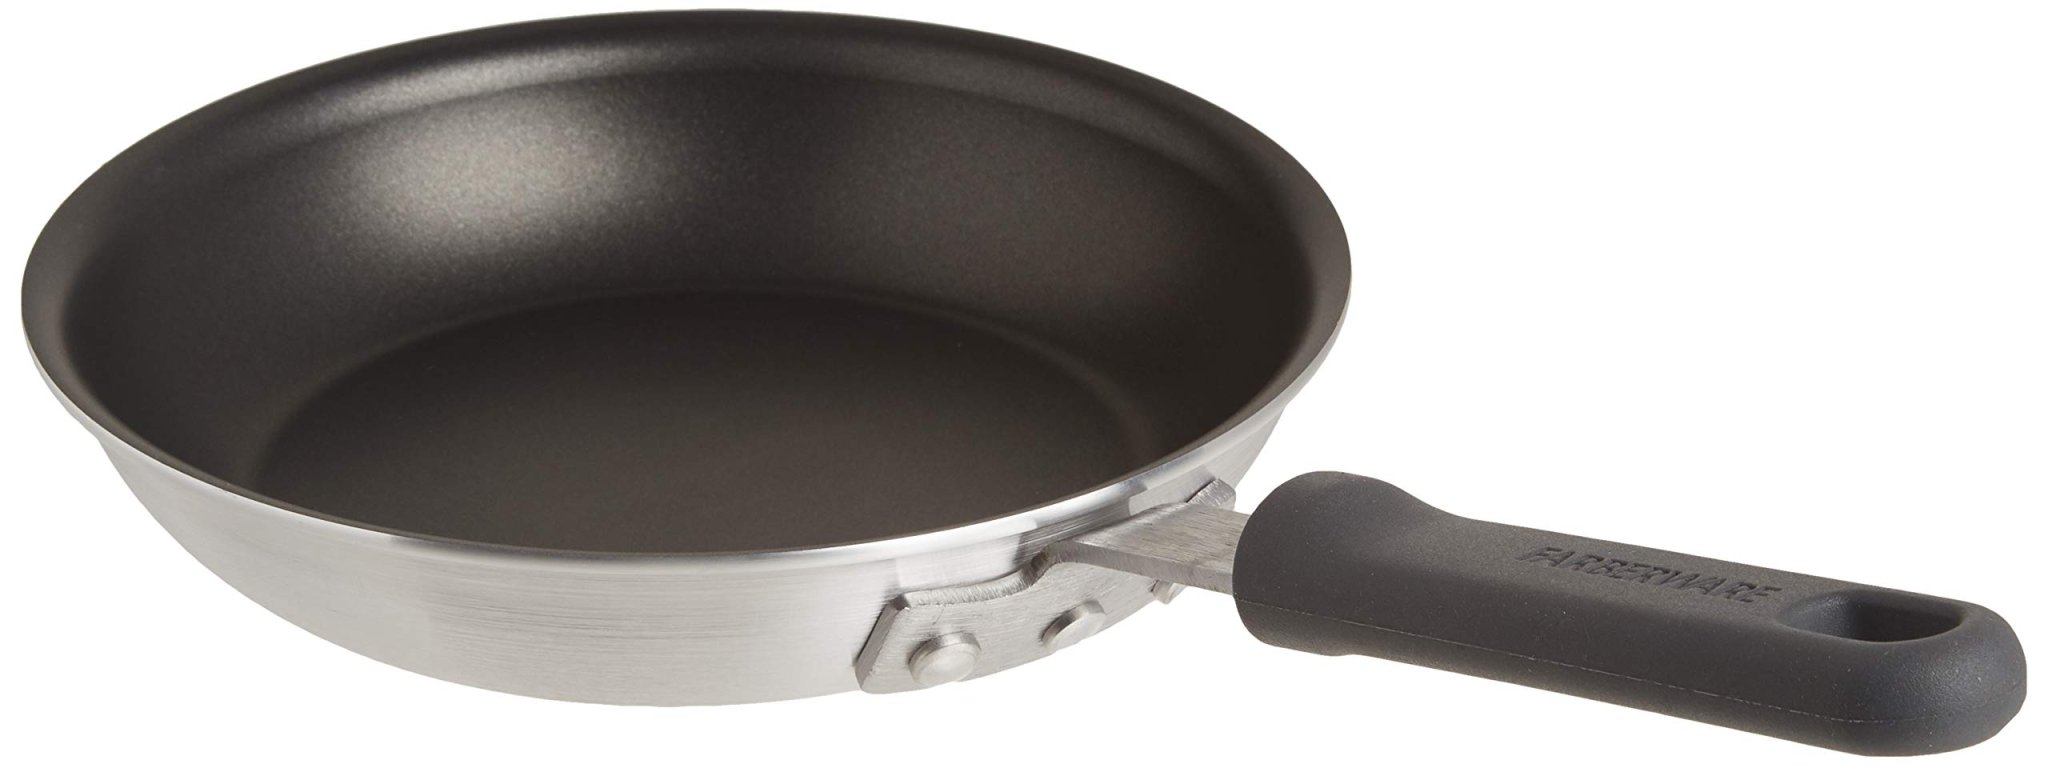 Farberware Restaurant Pro Nonstick Frying Pan / Fry Pan / Skillet - 8 Inch, Silver